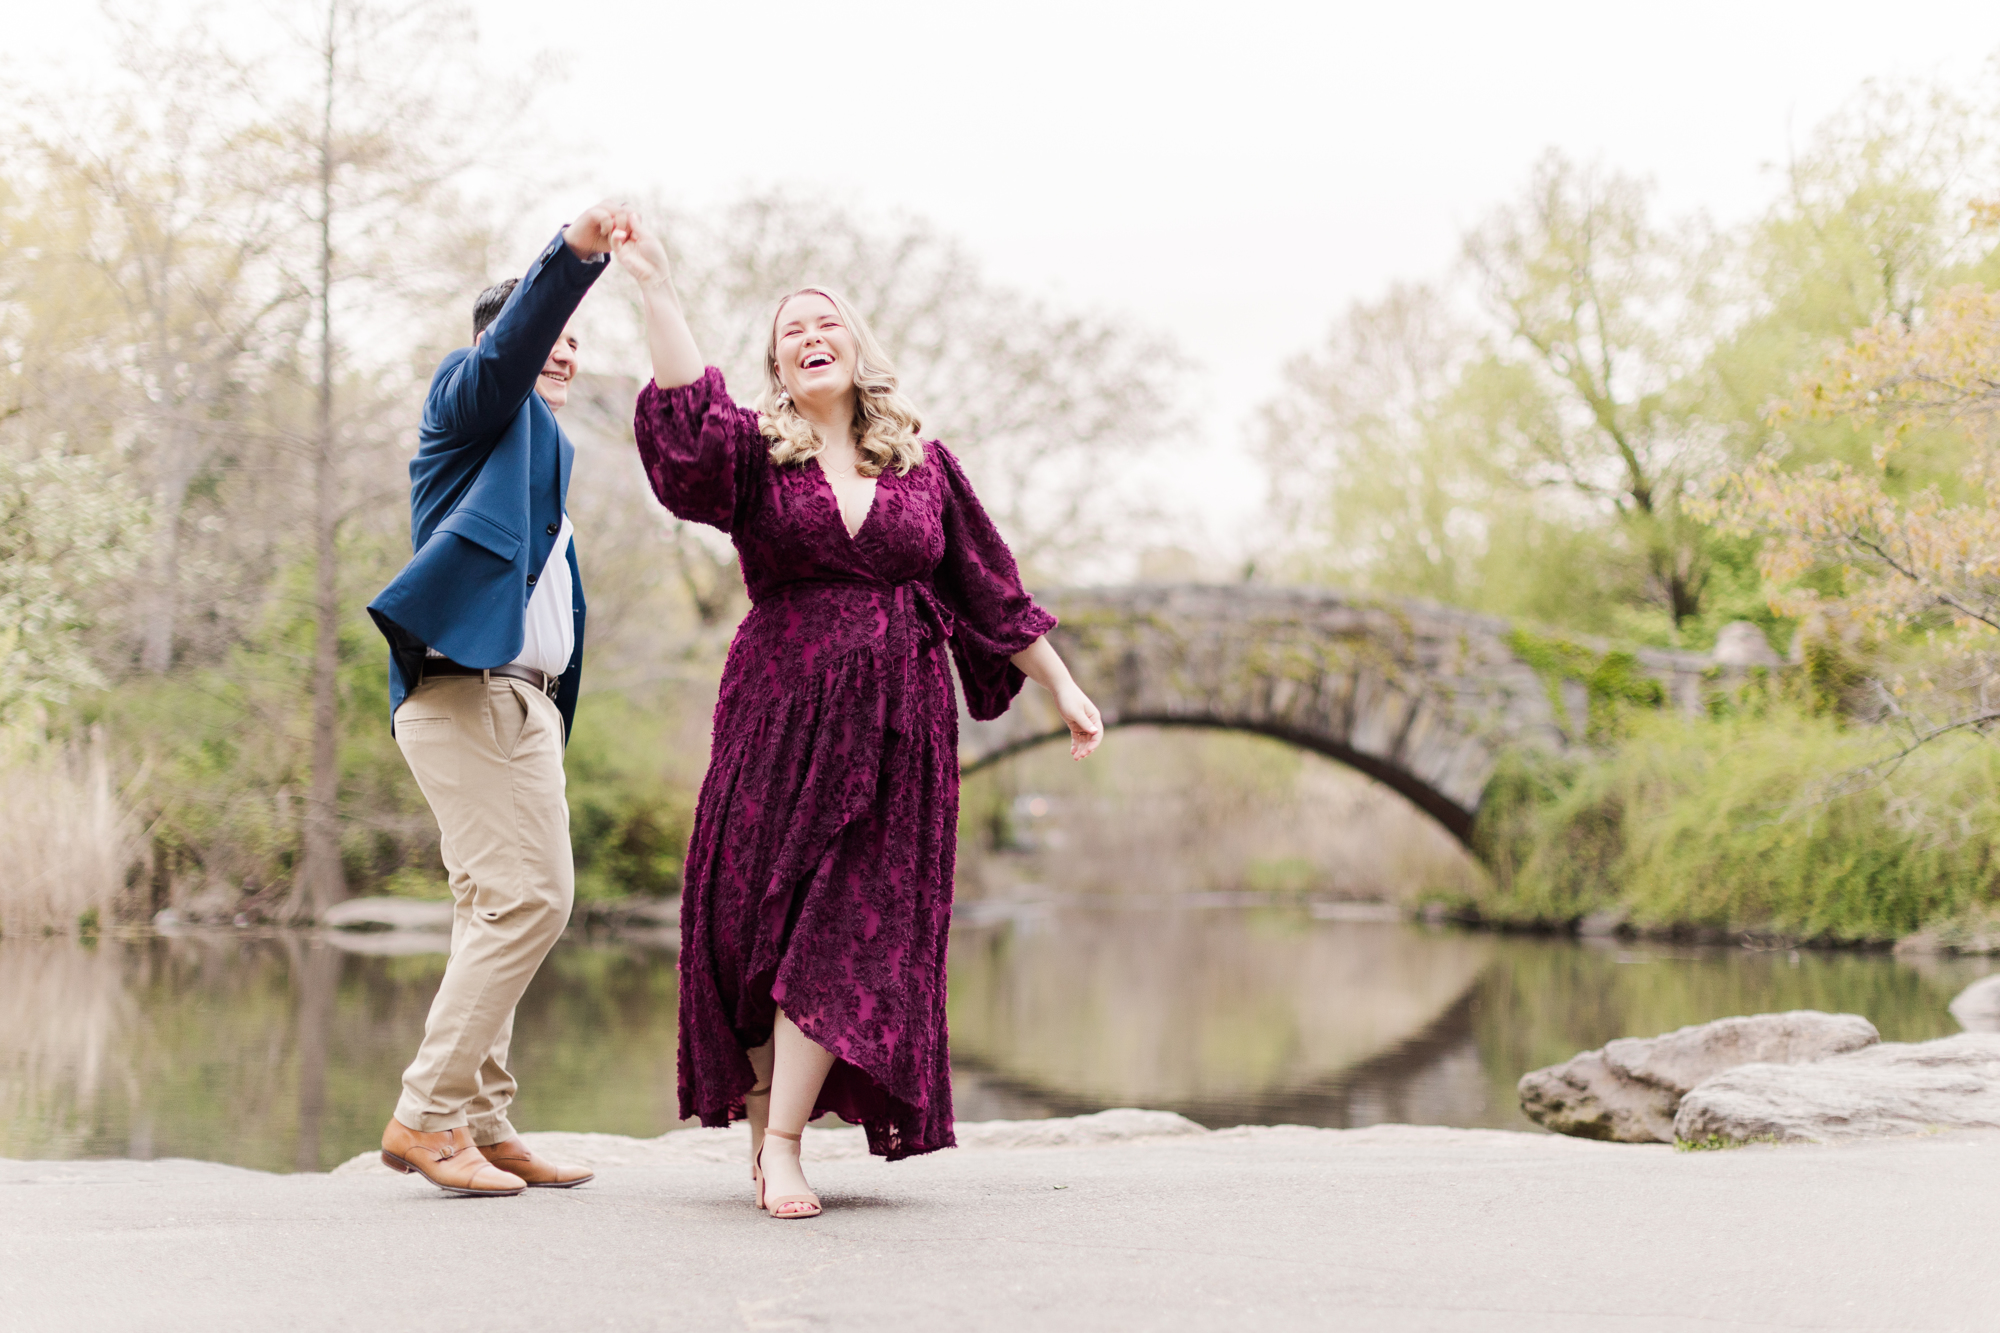 Sentimental Engagement Pictures in Central Park